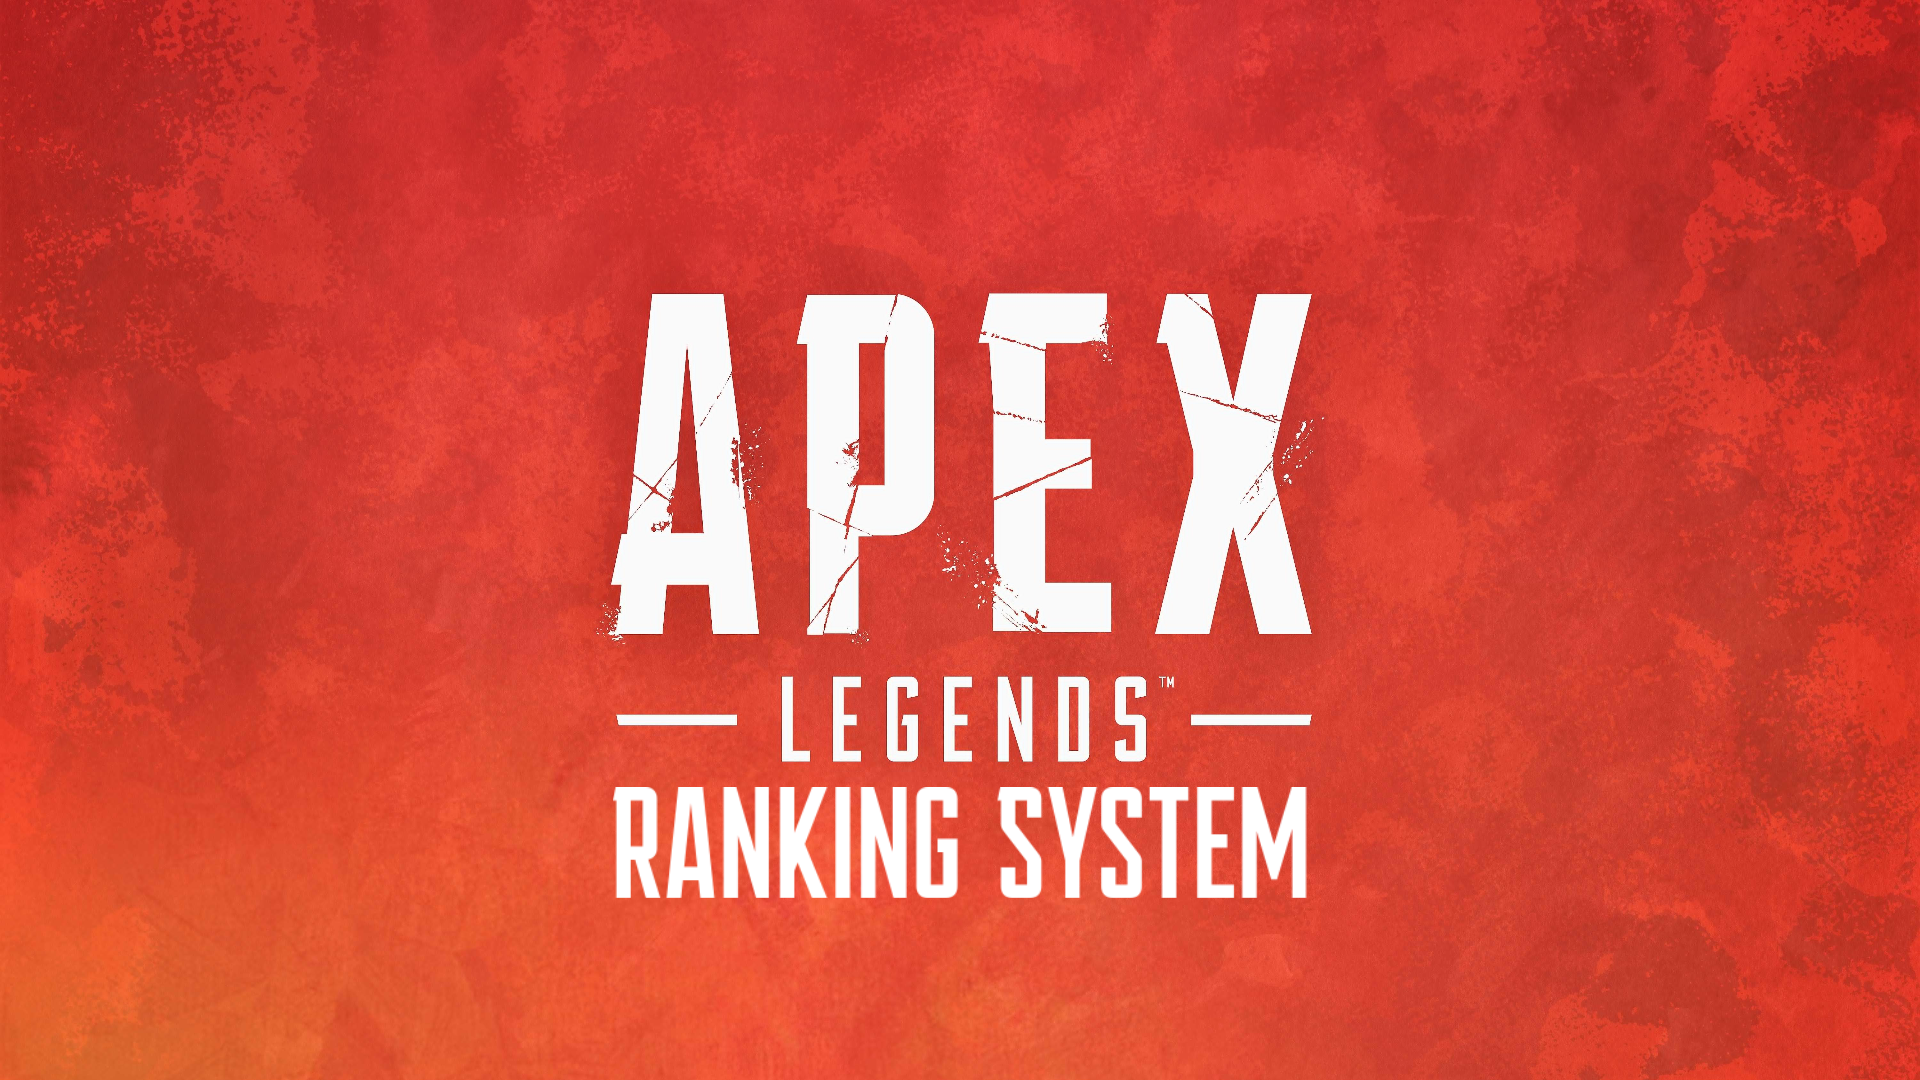 Ranking System